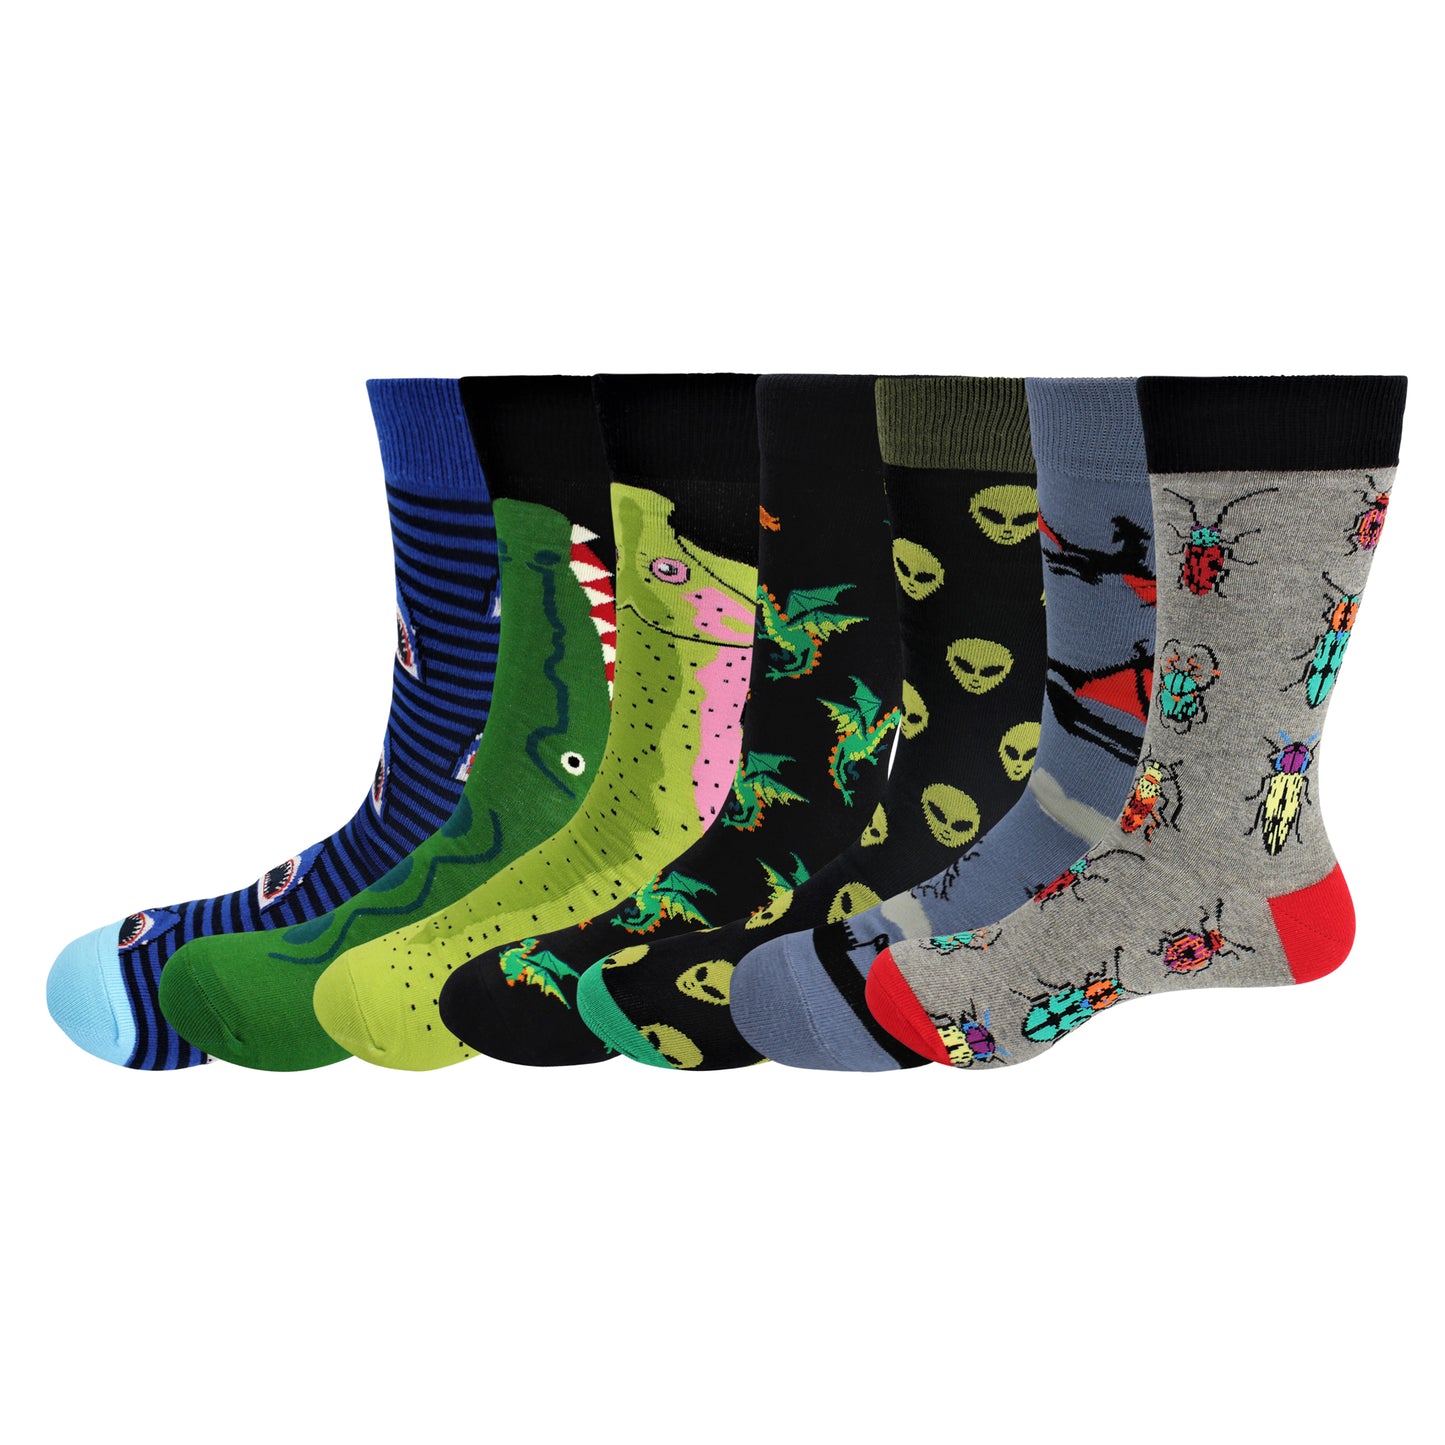 Animal Socks - Shark, Dragon, Crocodile, Beatles Fun Socks